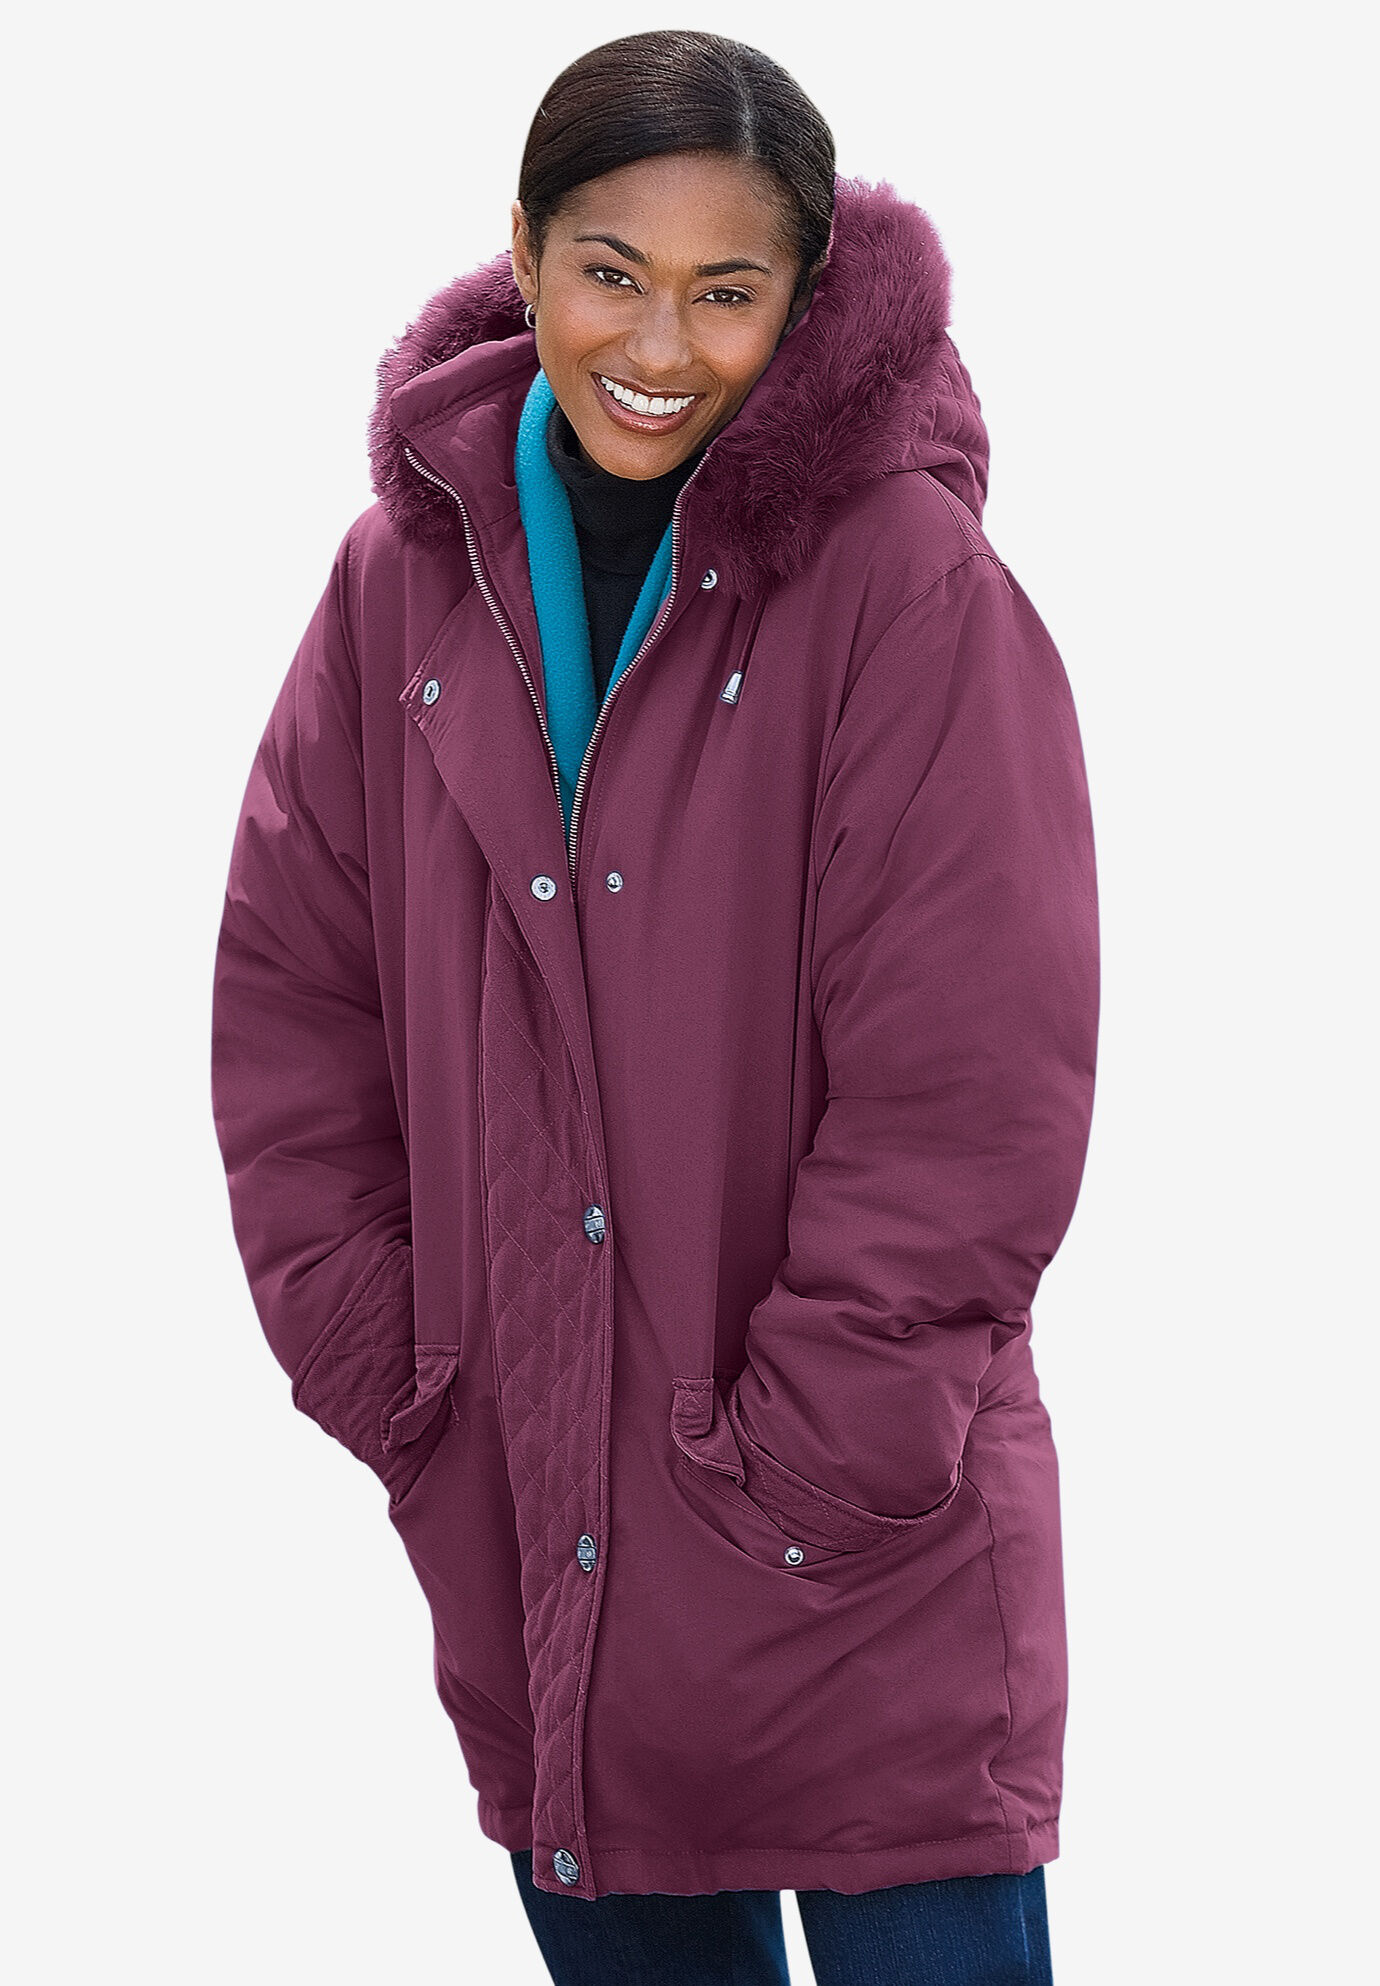 Ladies Plus Size 10-28 Lavender Light Coat Hooded Versatile Jacket Womens 